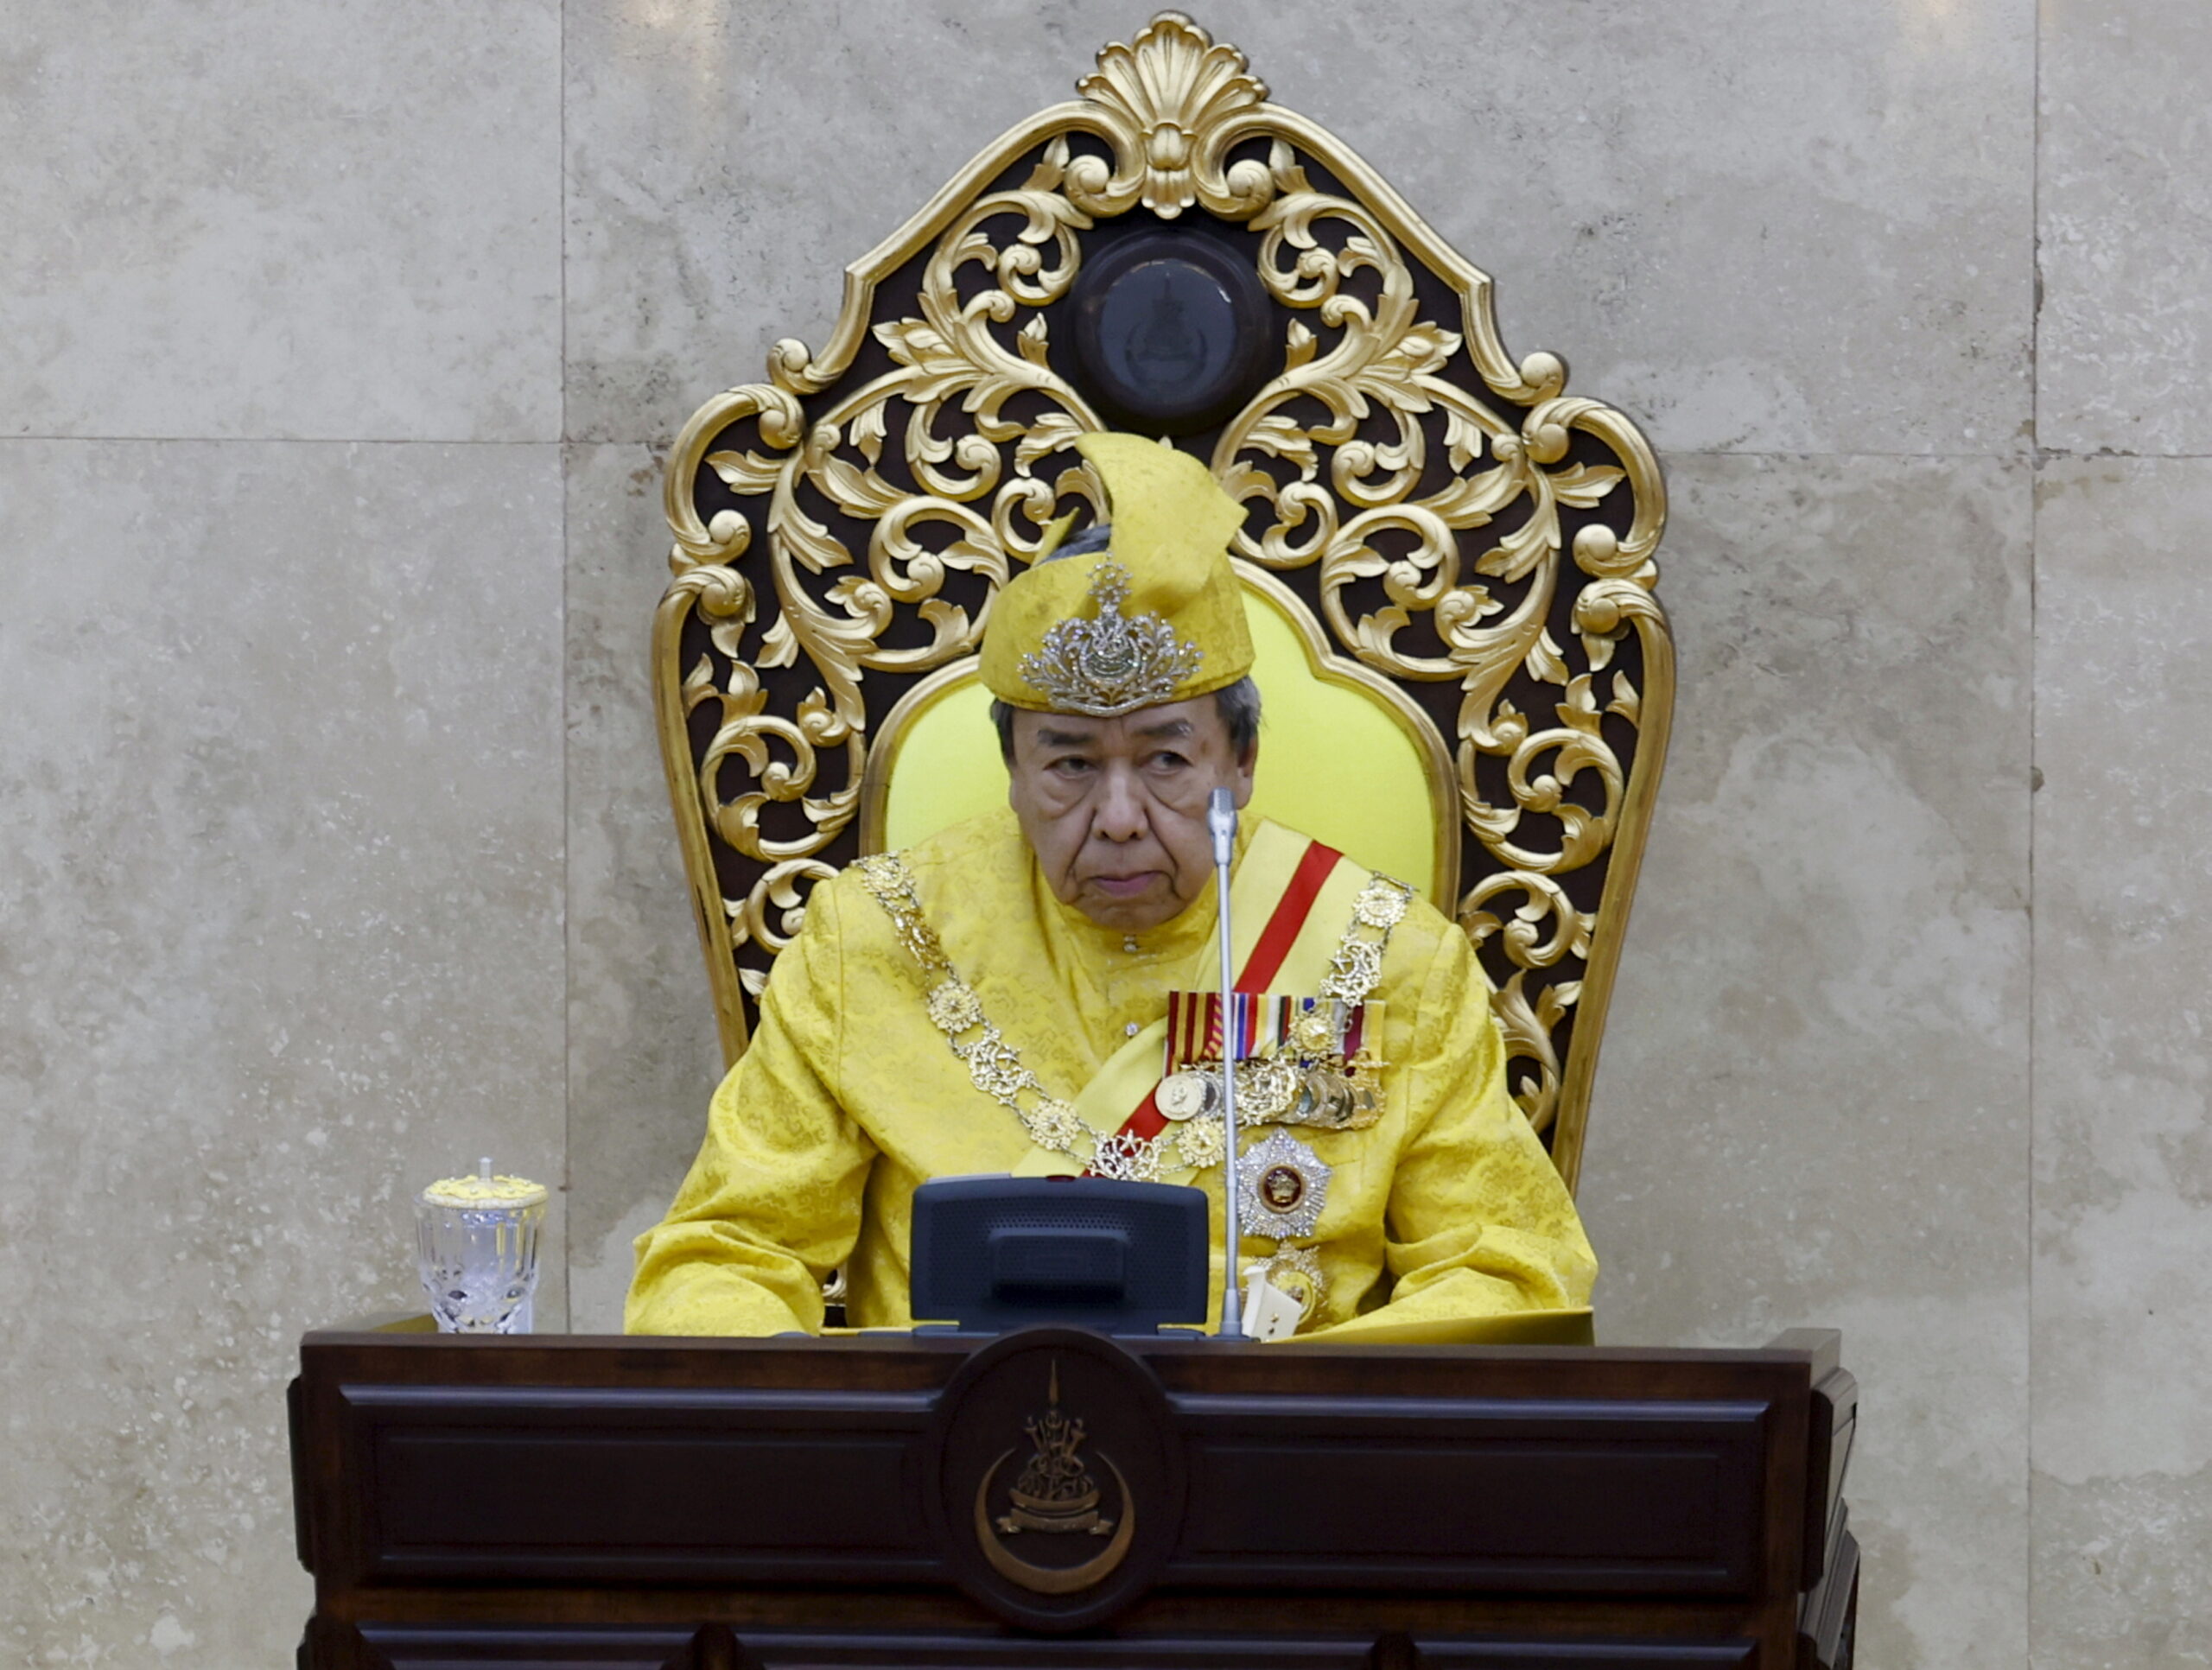 Sultan Selangor titah penjawat awam perlu kurangkan segera peraturan menyusahkan rakyat